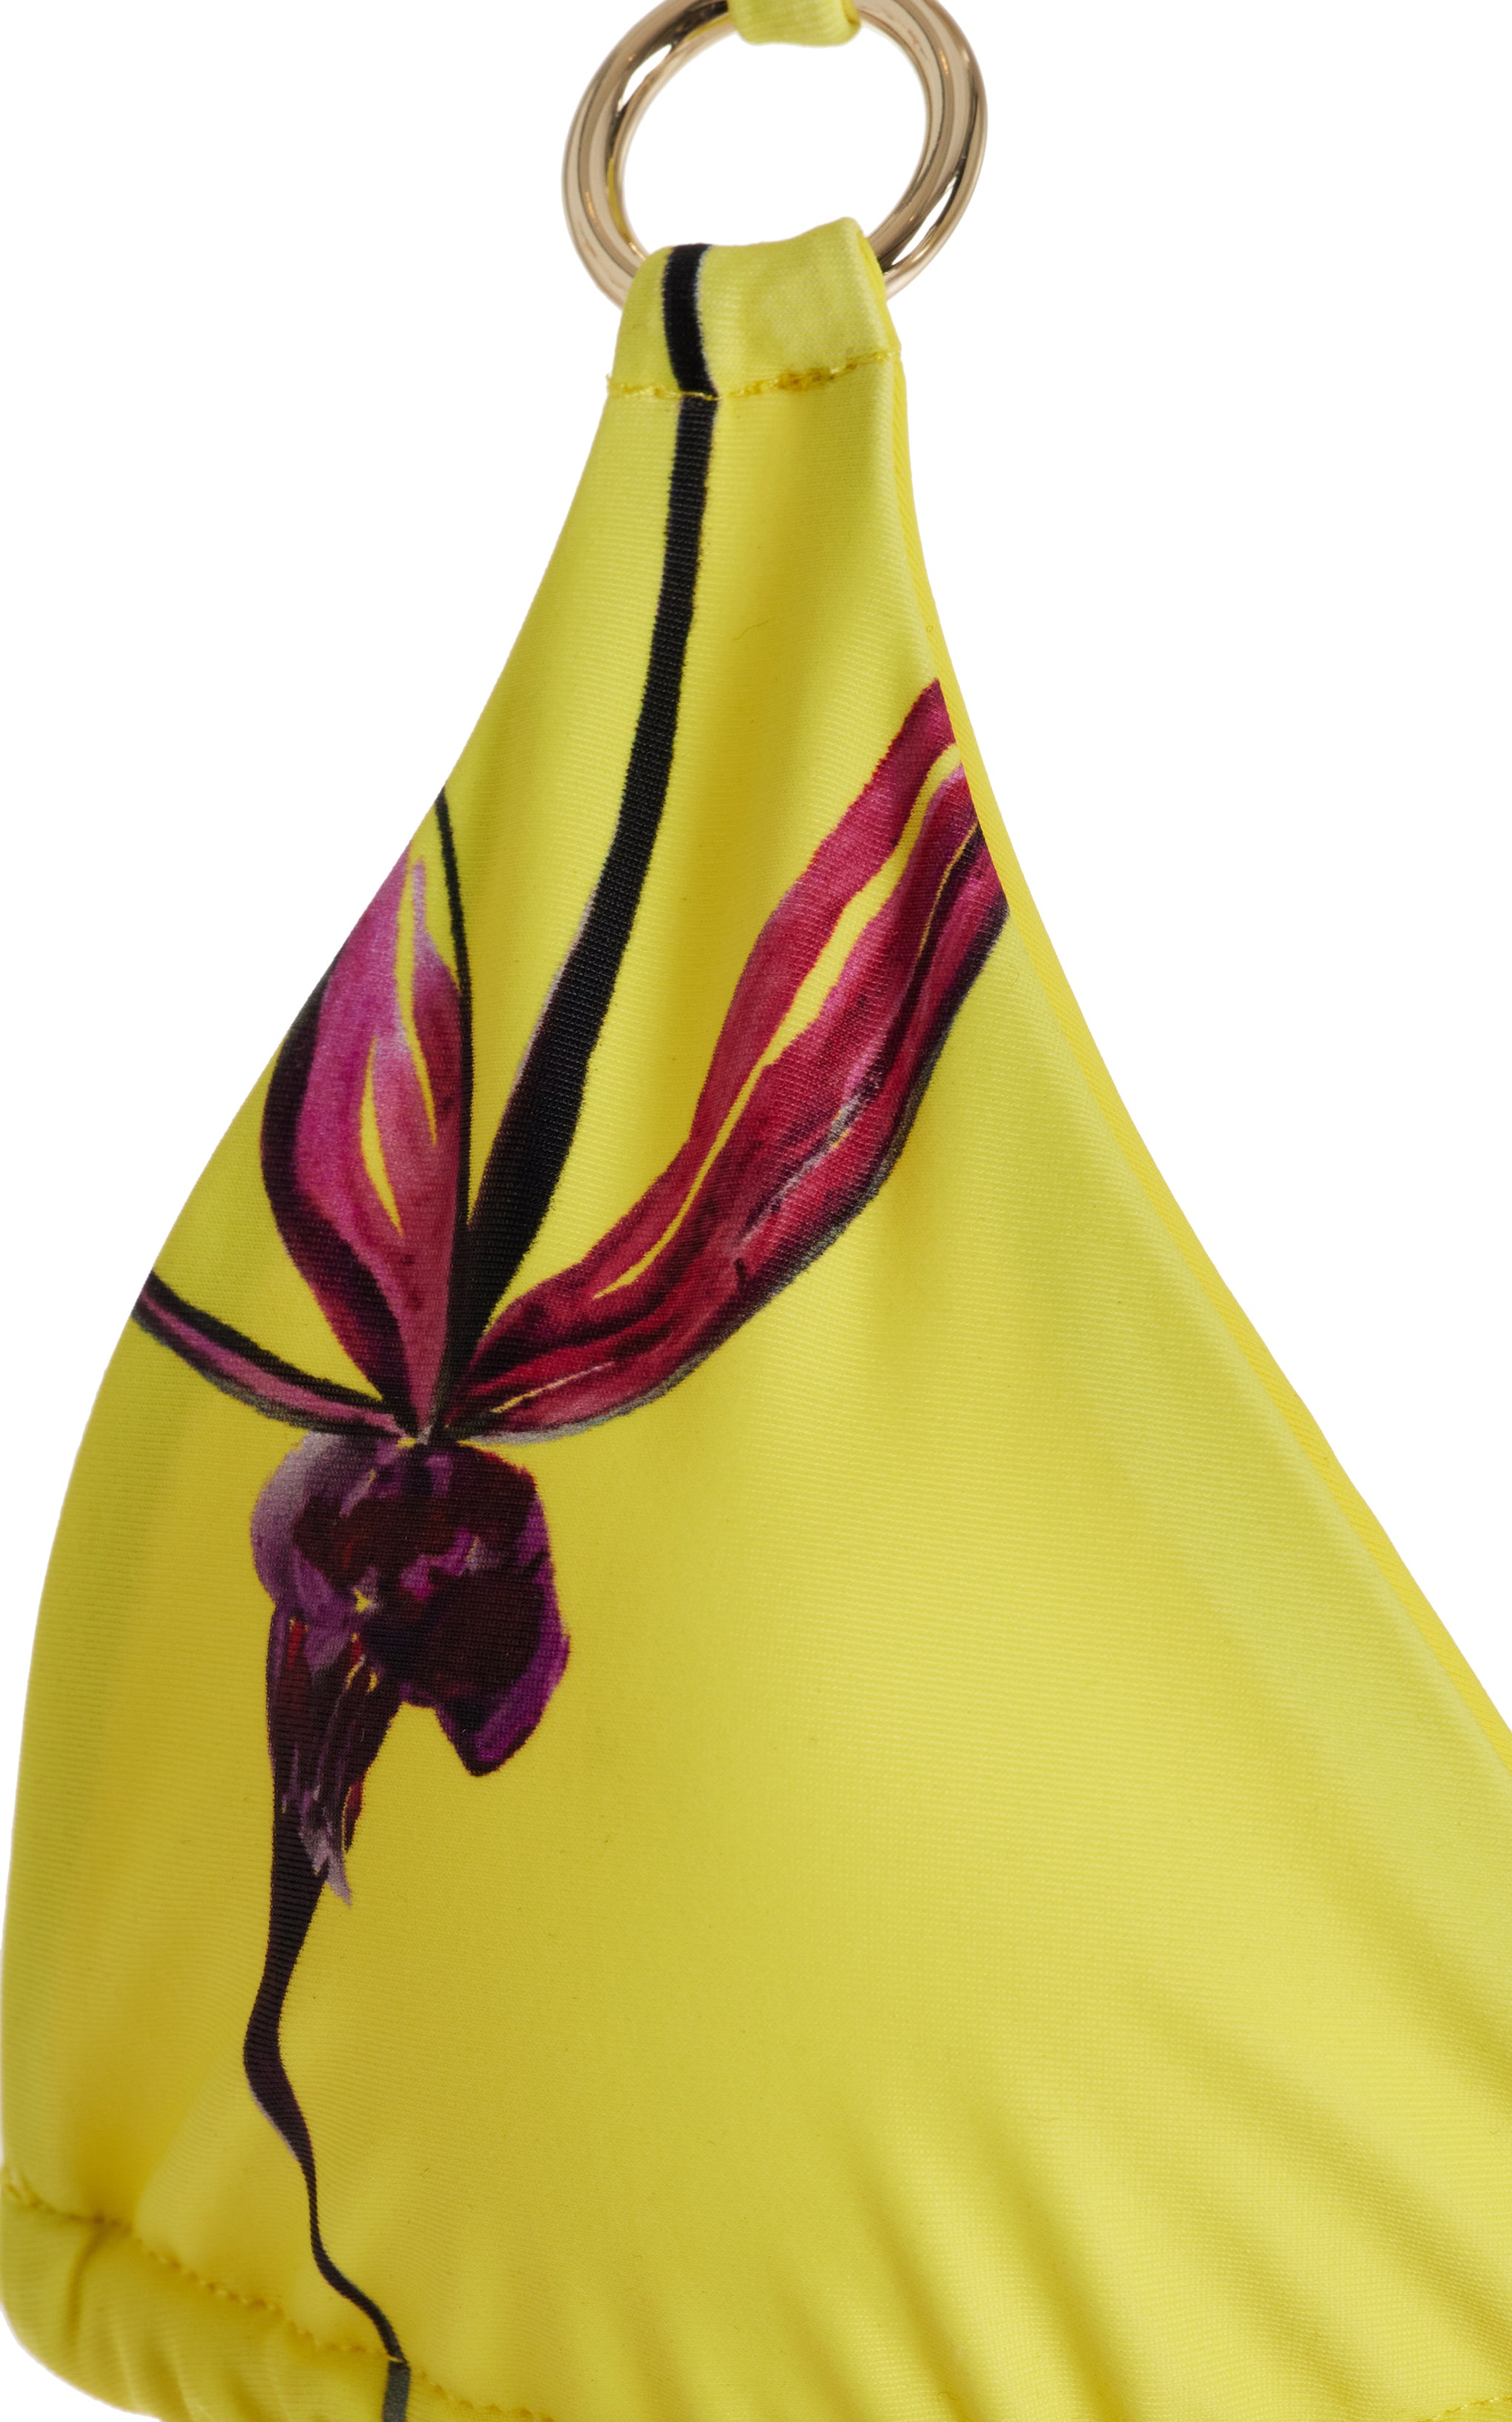 The Louisa Ballou Mini Ring Bikini Top in Caledenia Orchid available at The New Trend Australia